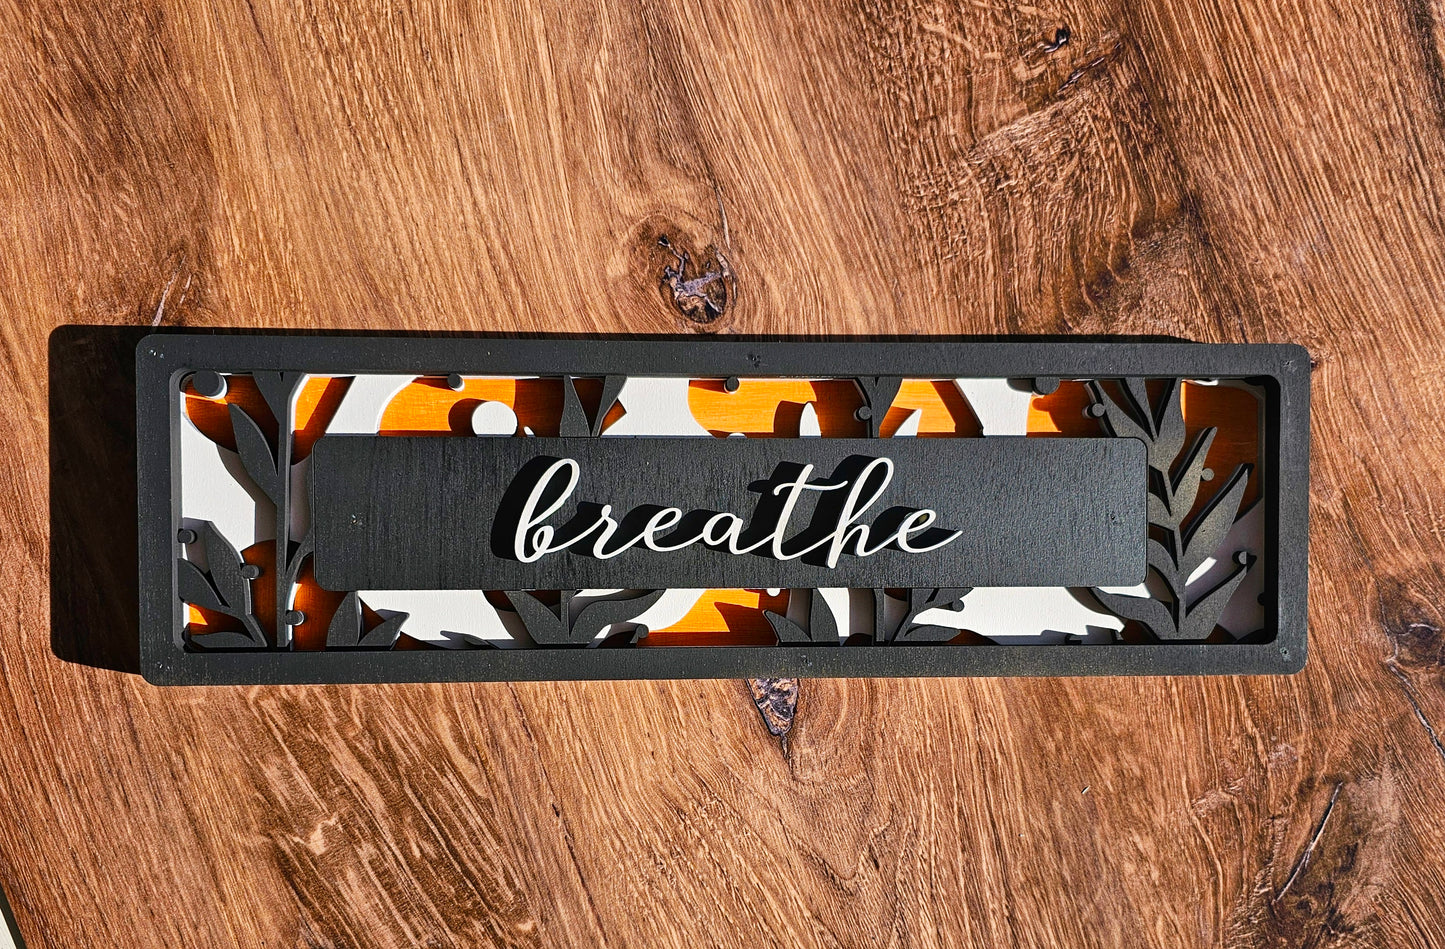 Breathe inspirational tabletop sign